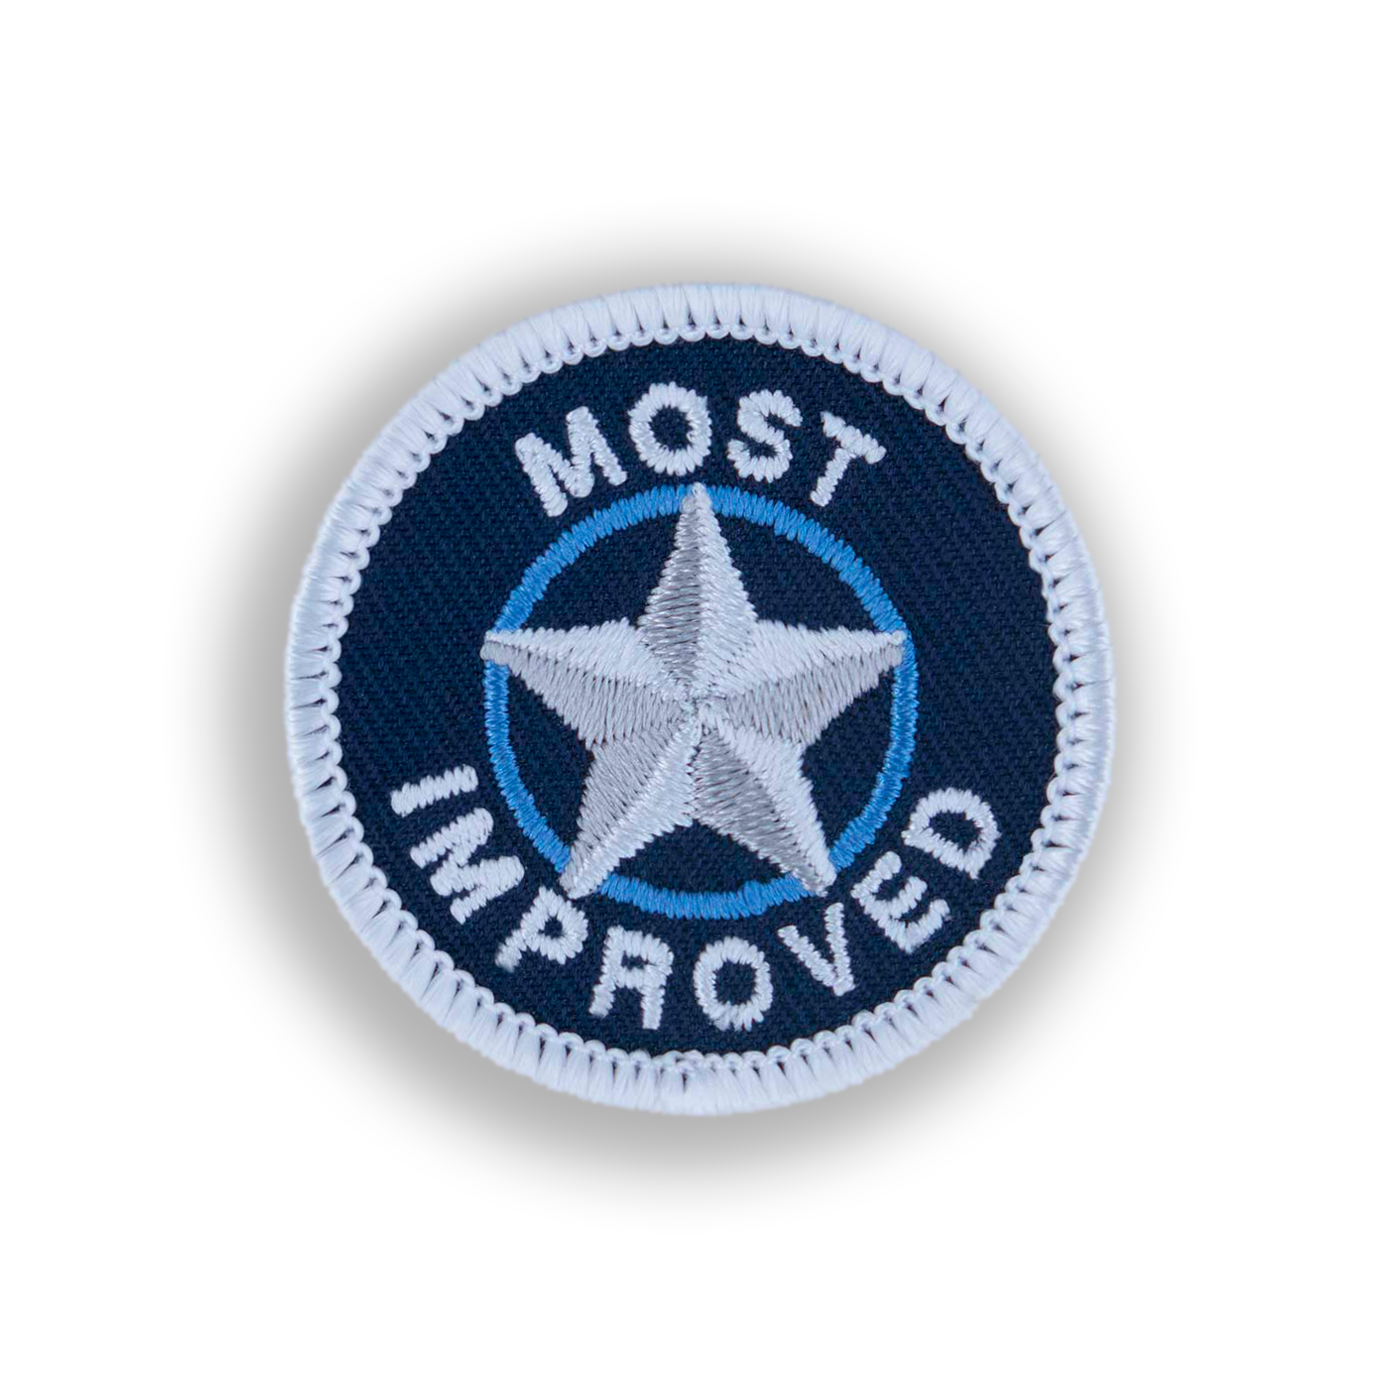 Most Improved Patch | Demerit Wear - Fake Merit Badges